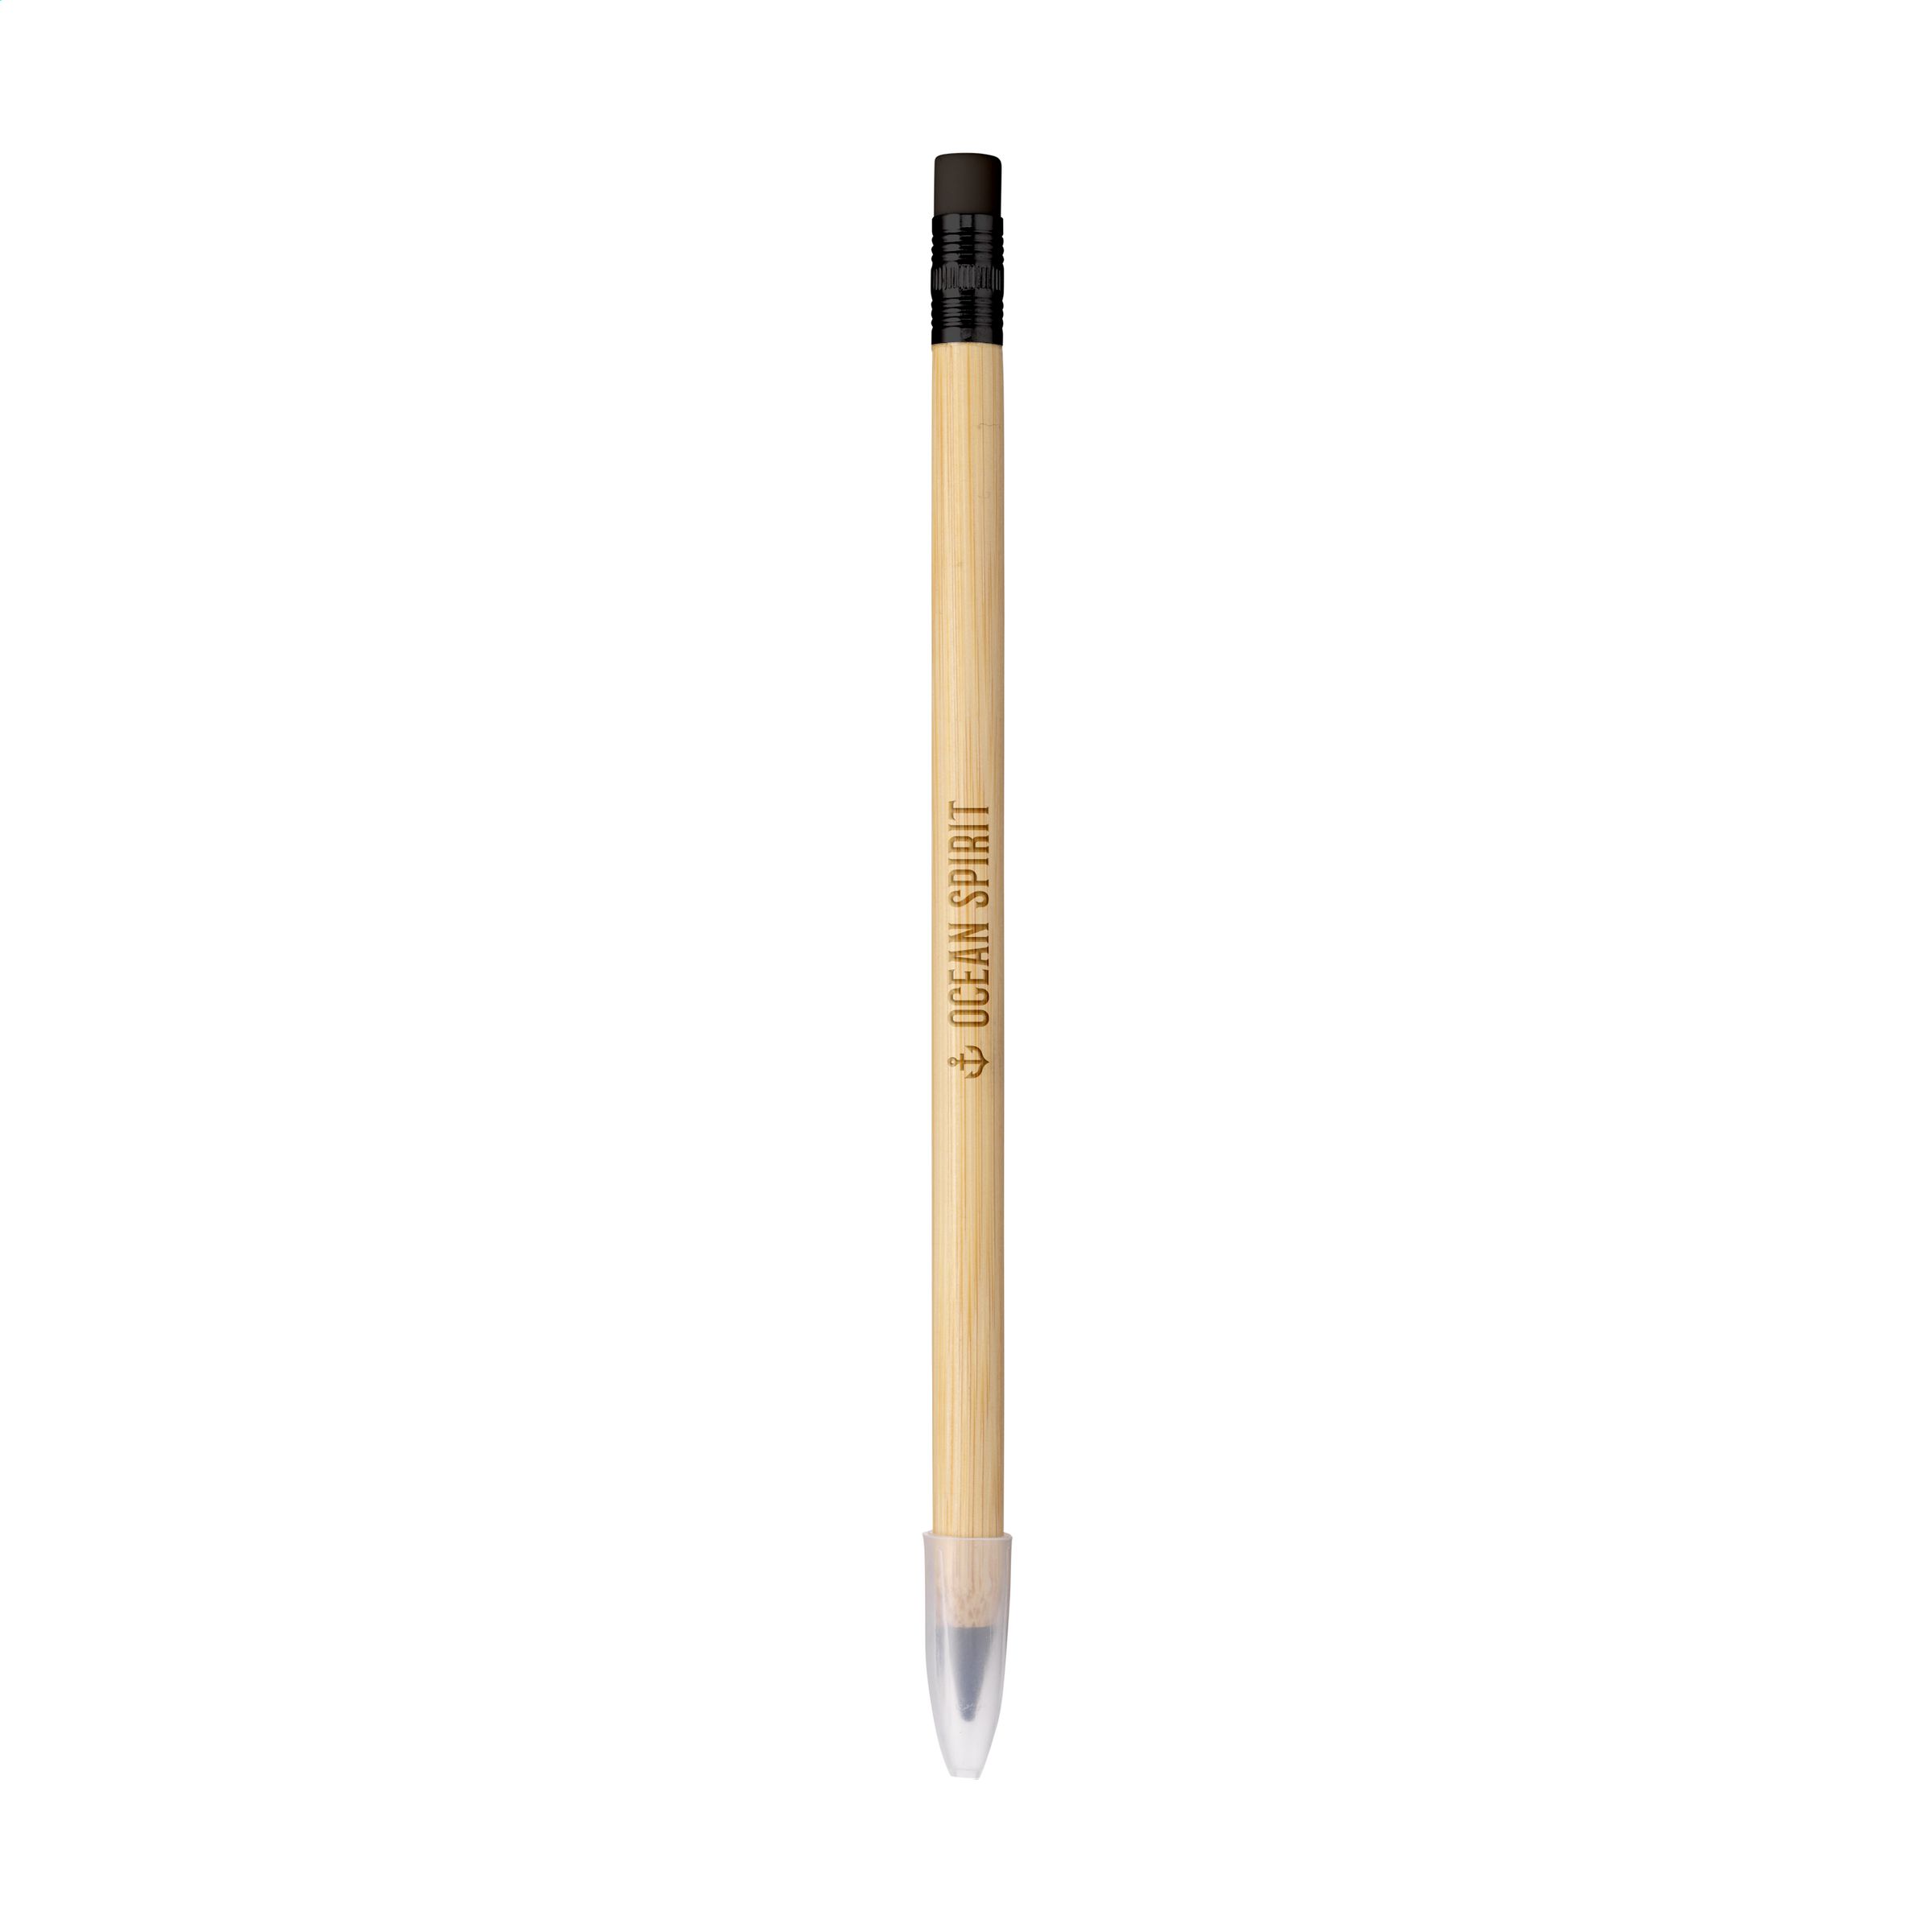 Everlast Bamboo Pencil - Home - Everdon